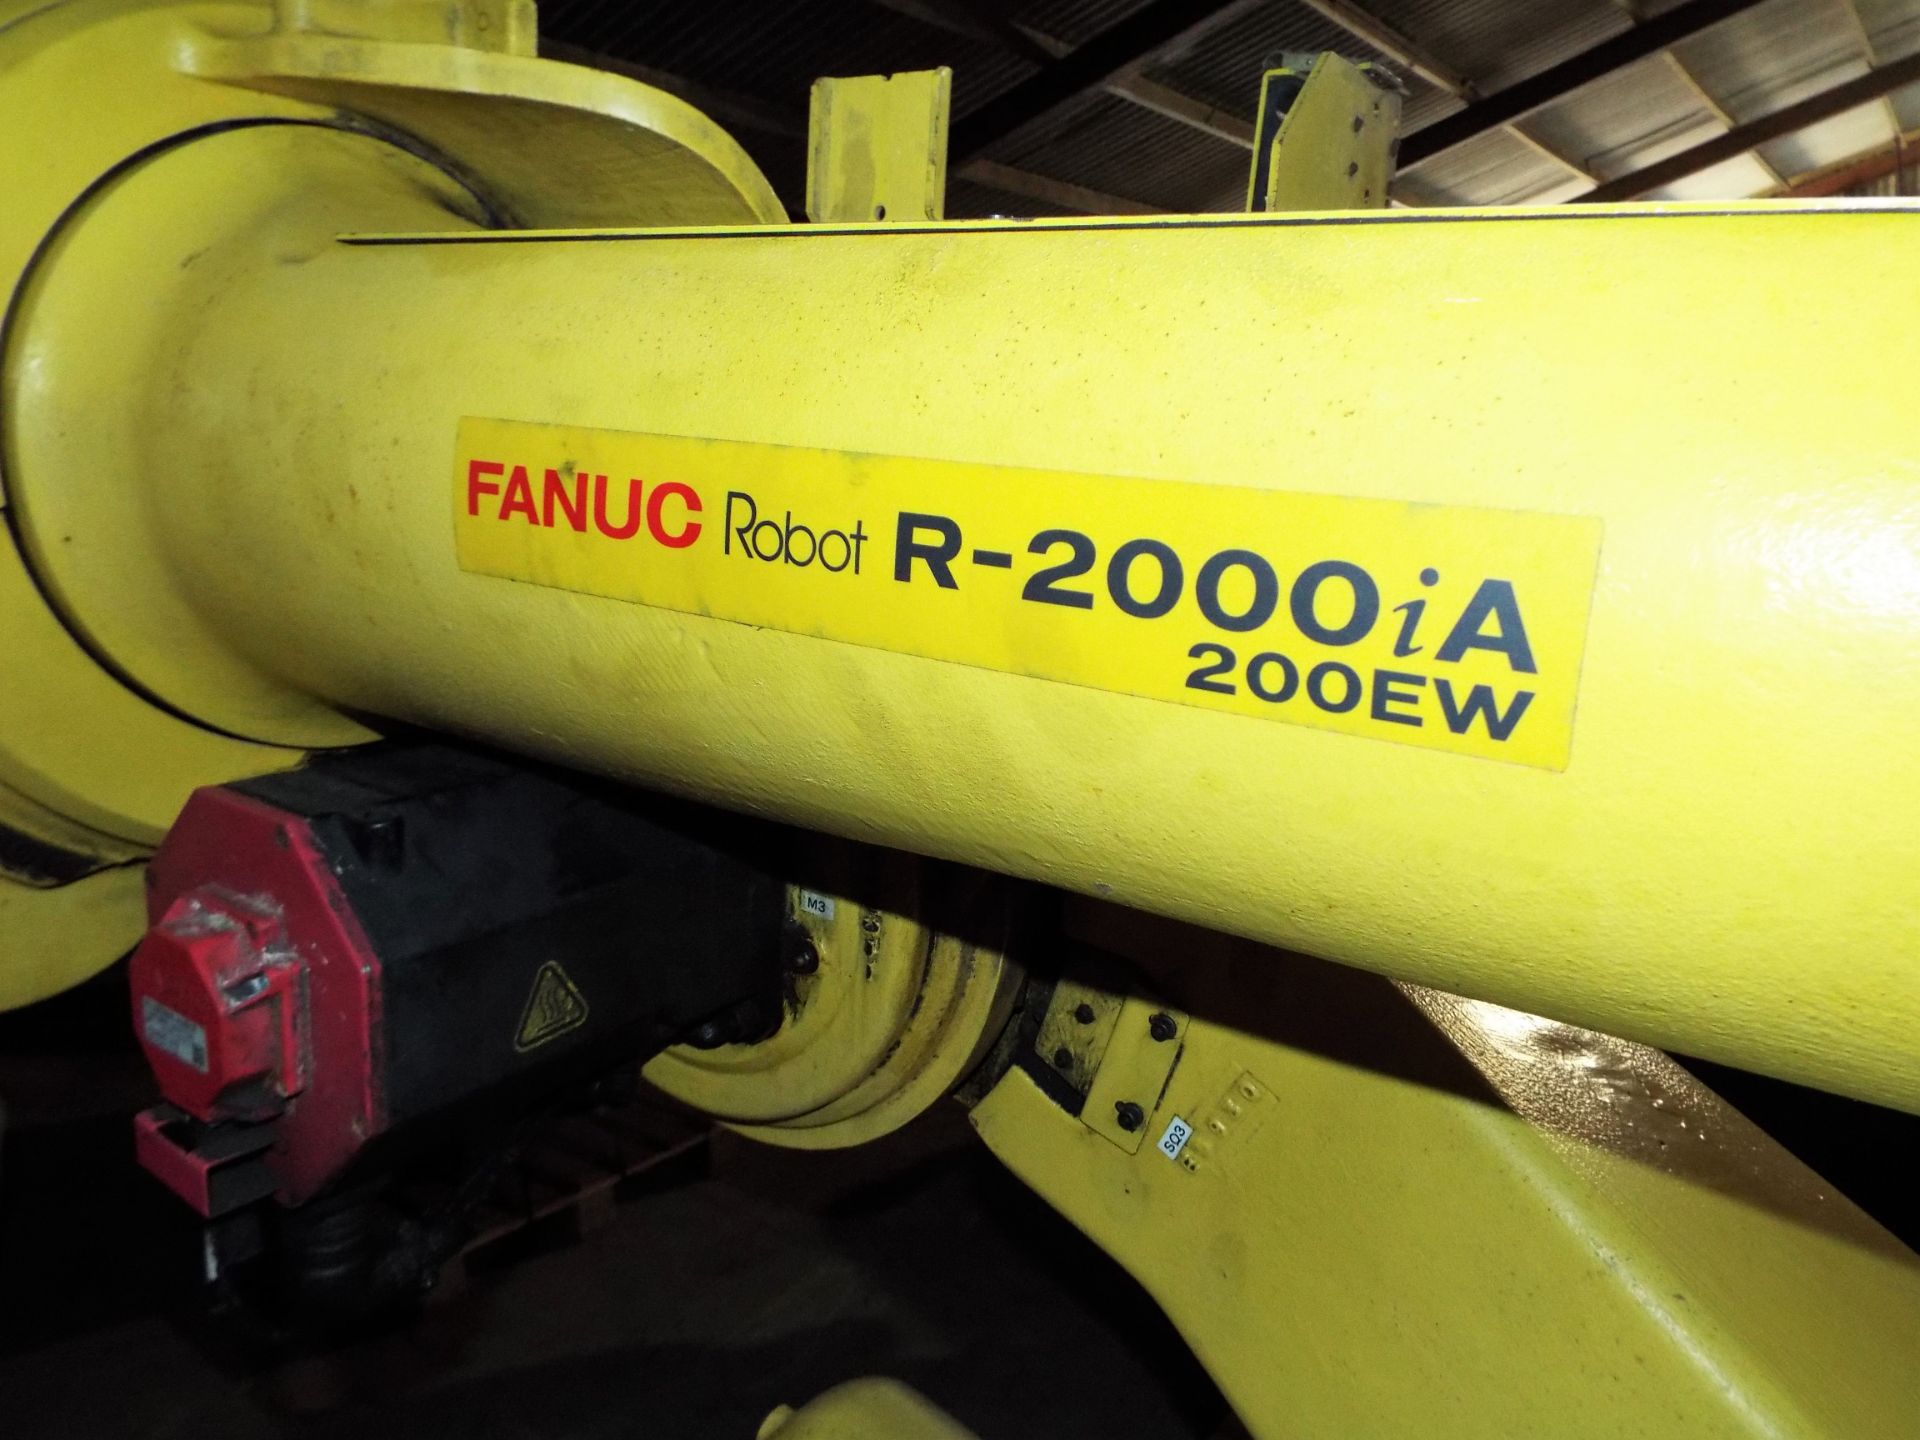 Fanuc Robot Type R-2000iA - 200EW - R-J3iB Control - Image 3 of 8